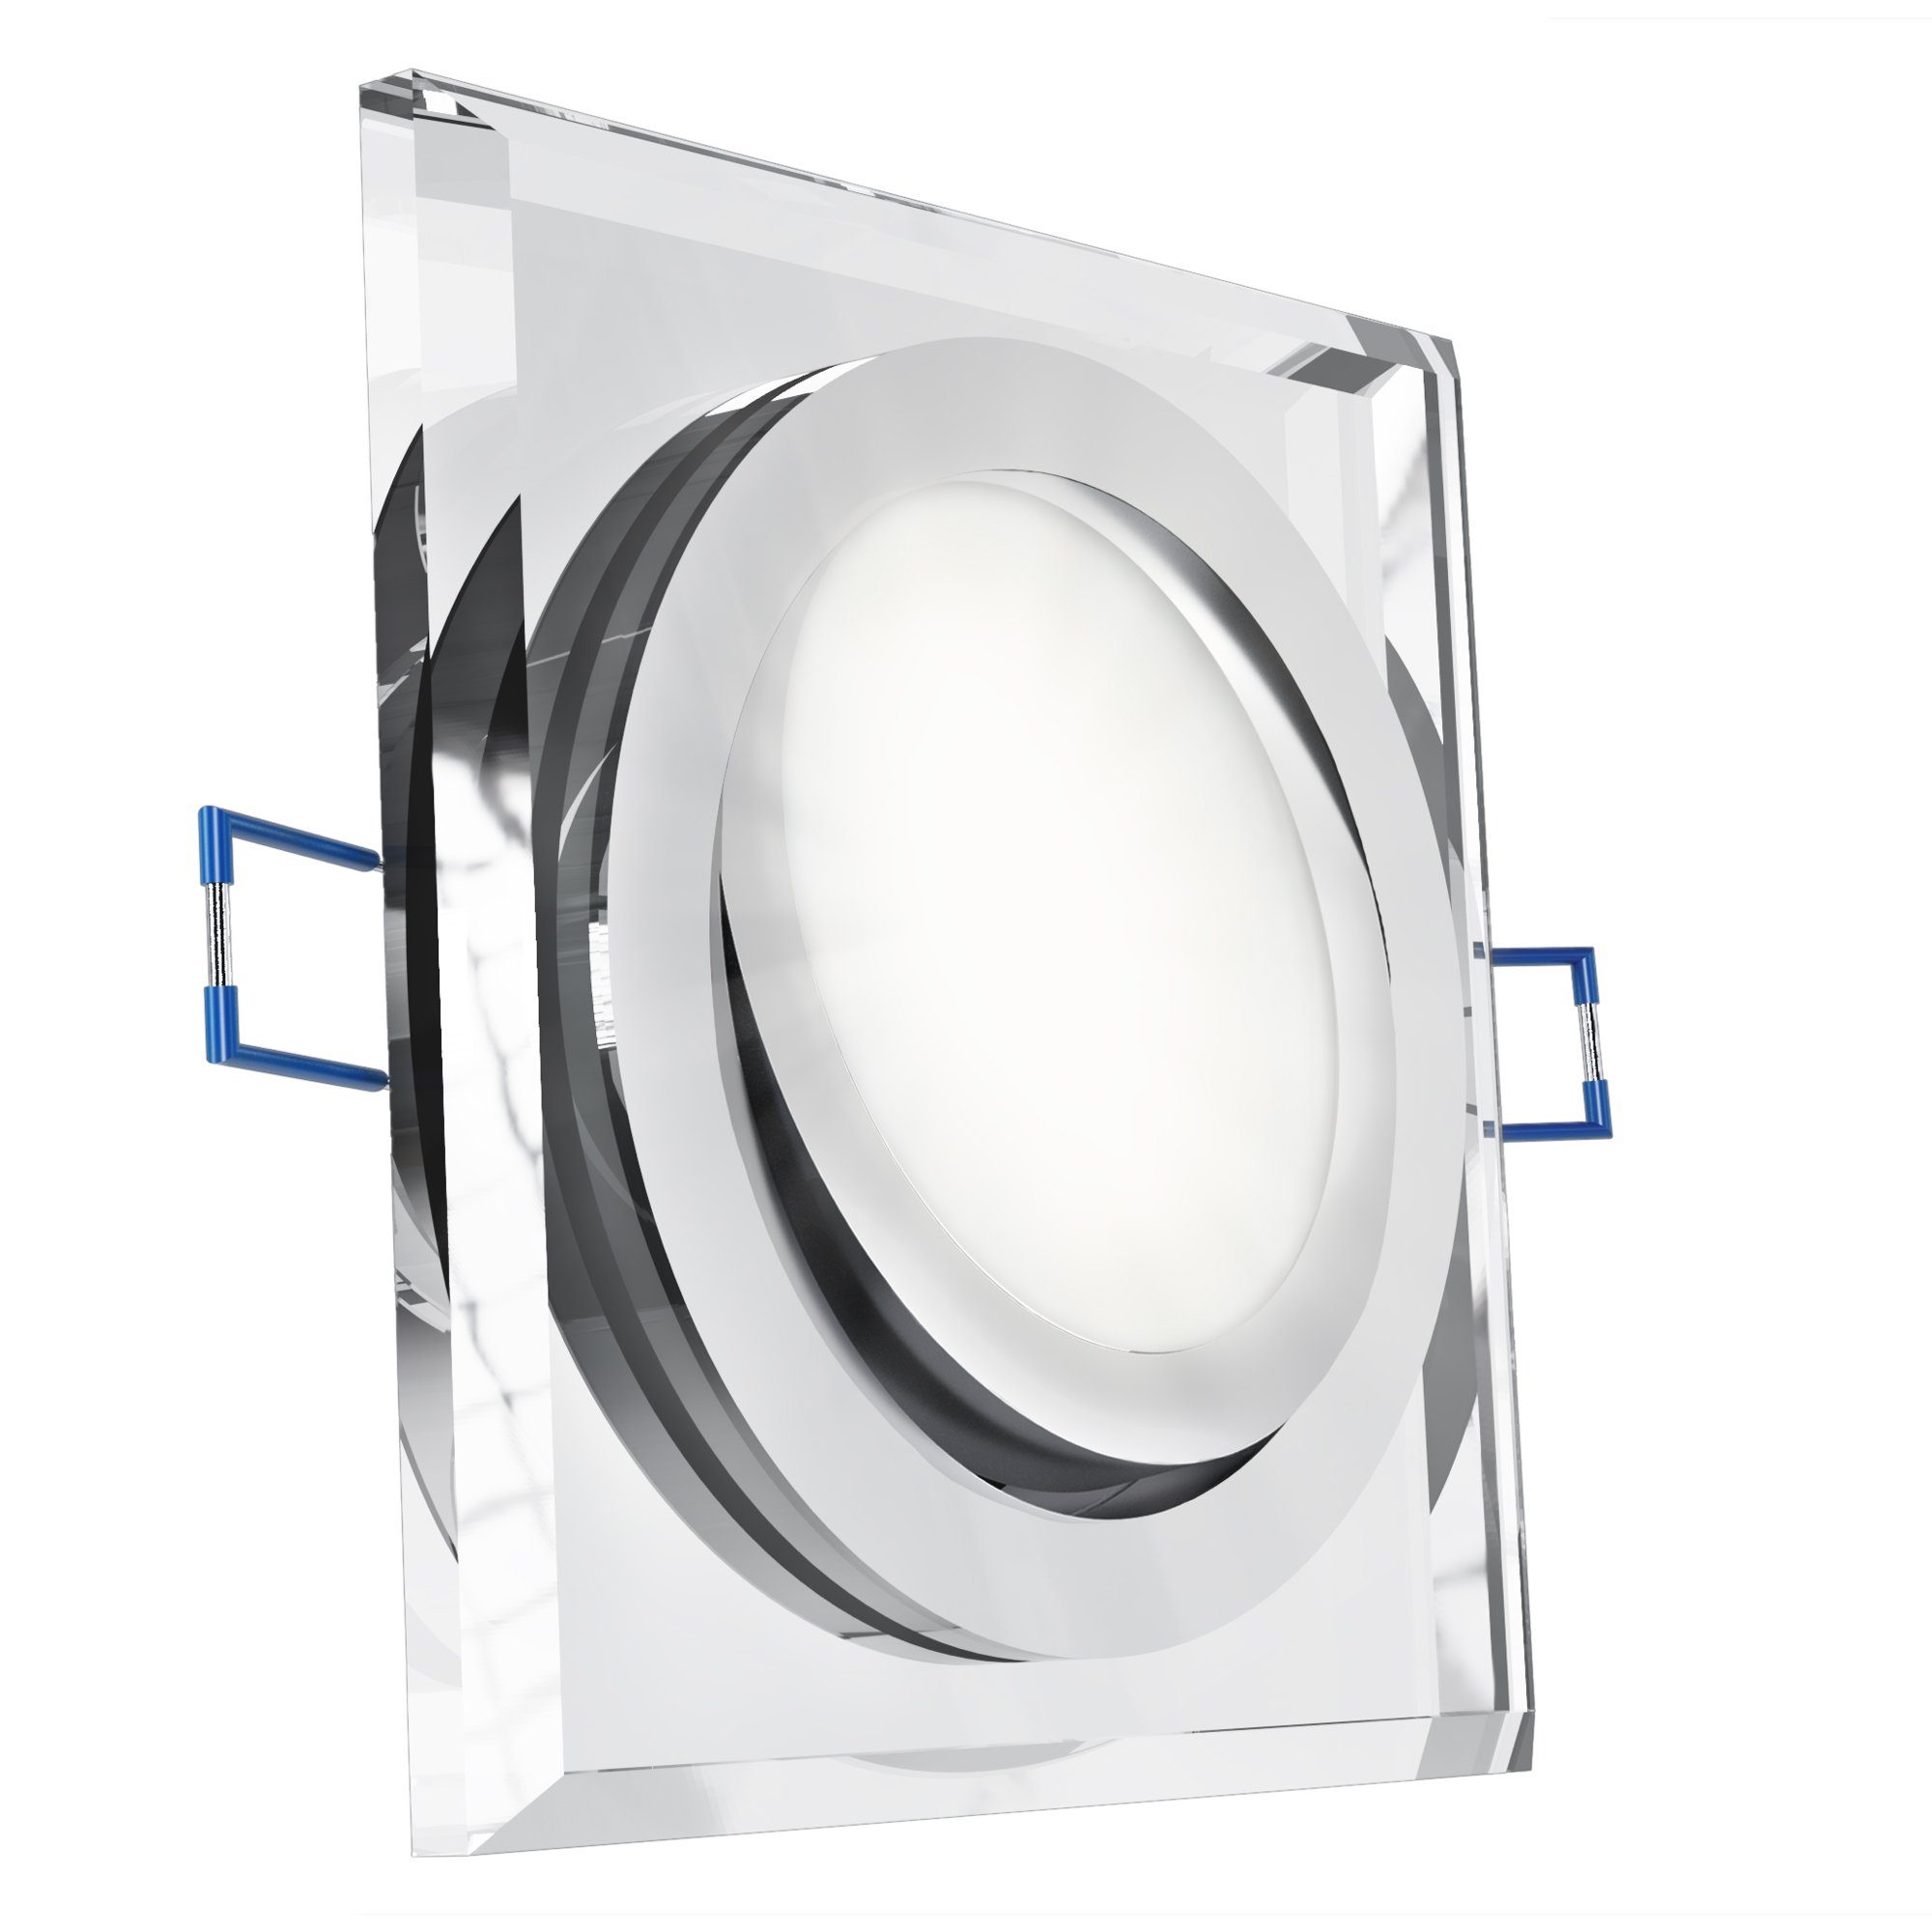 SSC-LUXon LED Einbaustrahler Schwenkbarer Glas LED Einbauspot flach eckig klar LED Modul dimmbar, Neutralweiß | Strahler